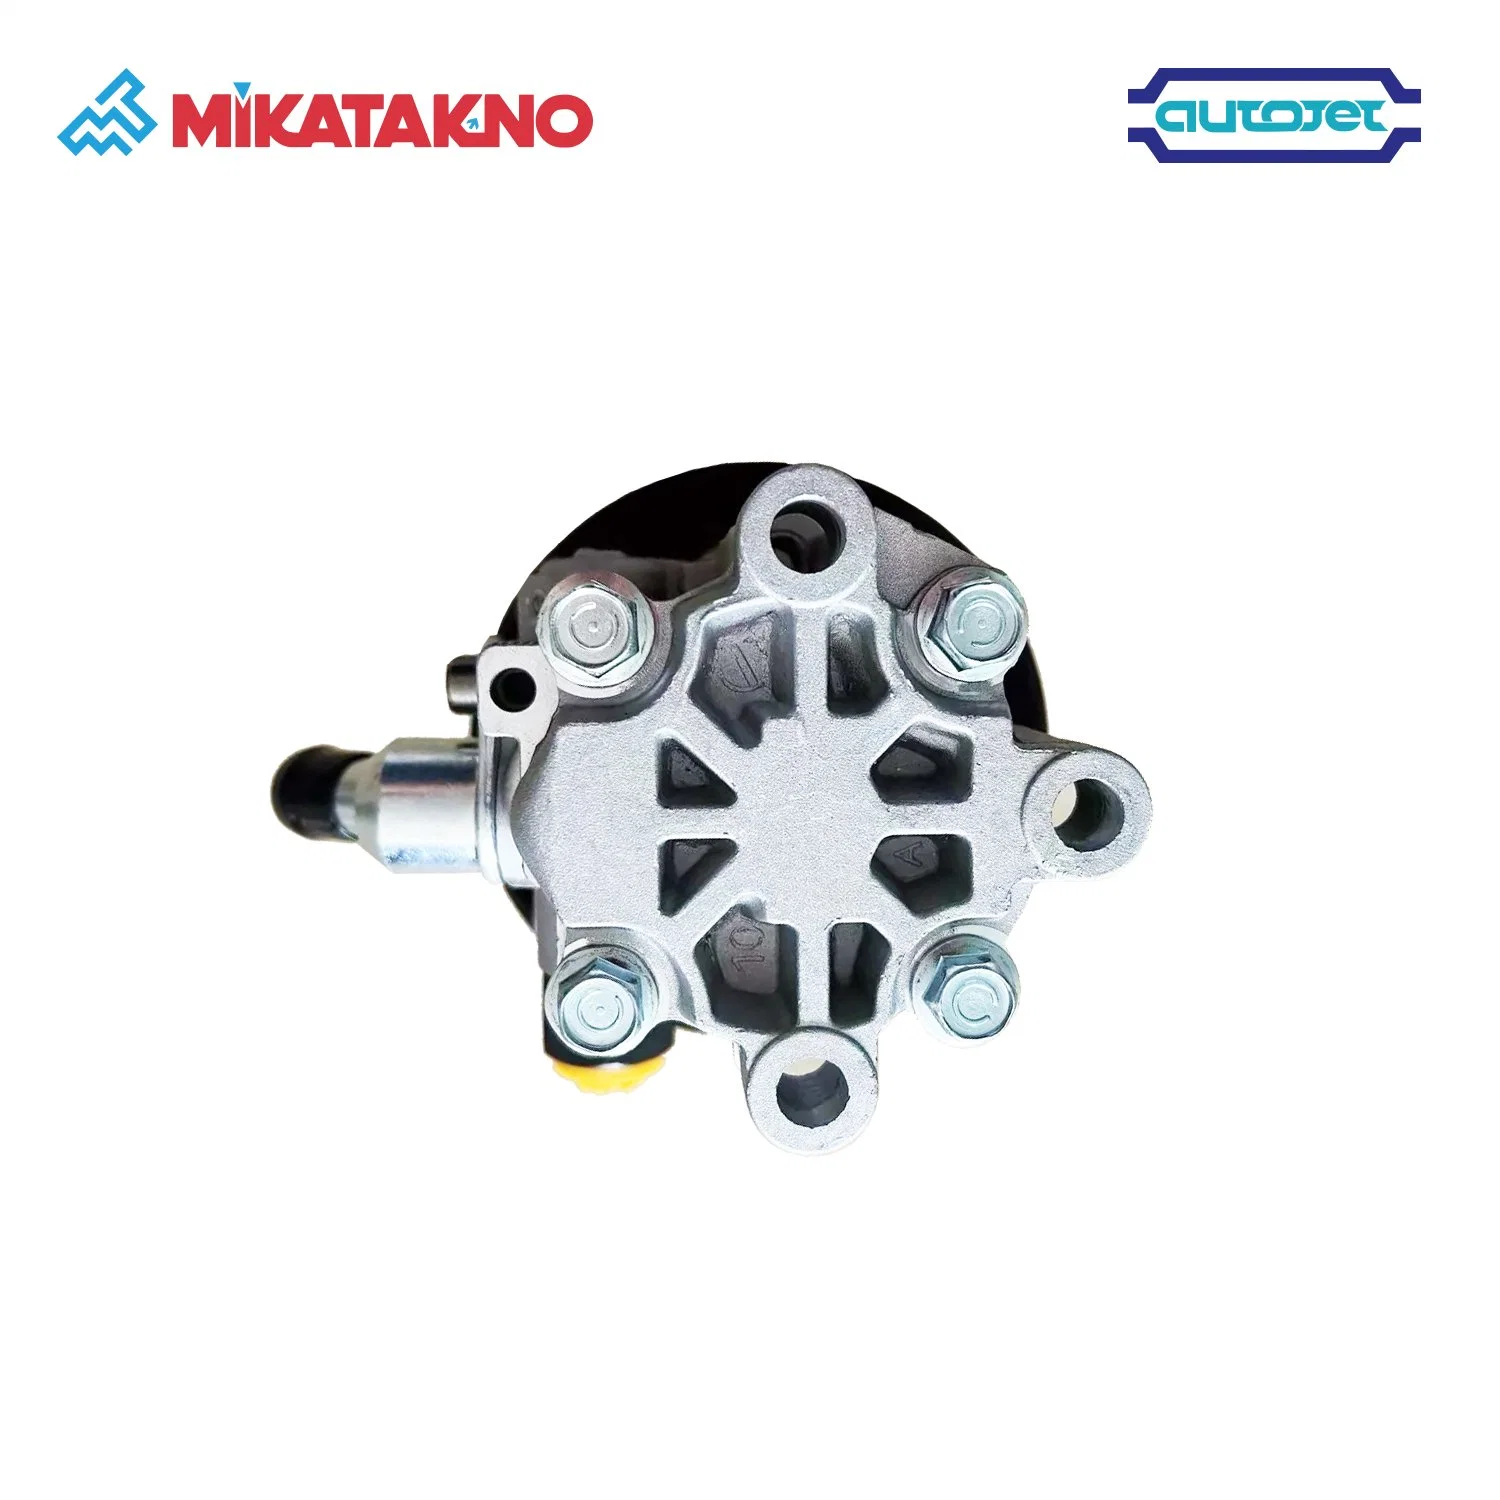 for Toyota Land Cruiser Uzj200 Auto Steering System- 44310-60520 Auto Spare Part Supplier of Power Steering Pump